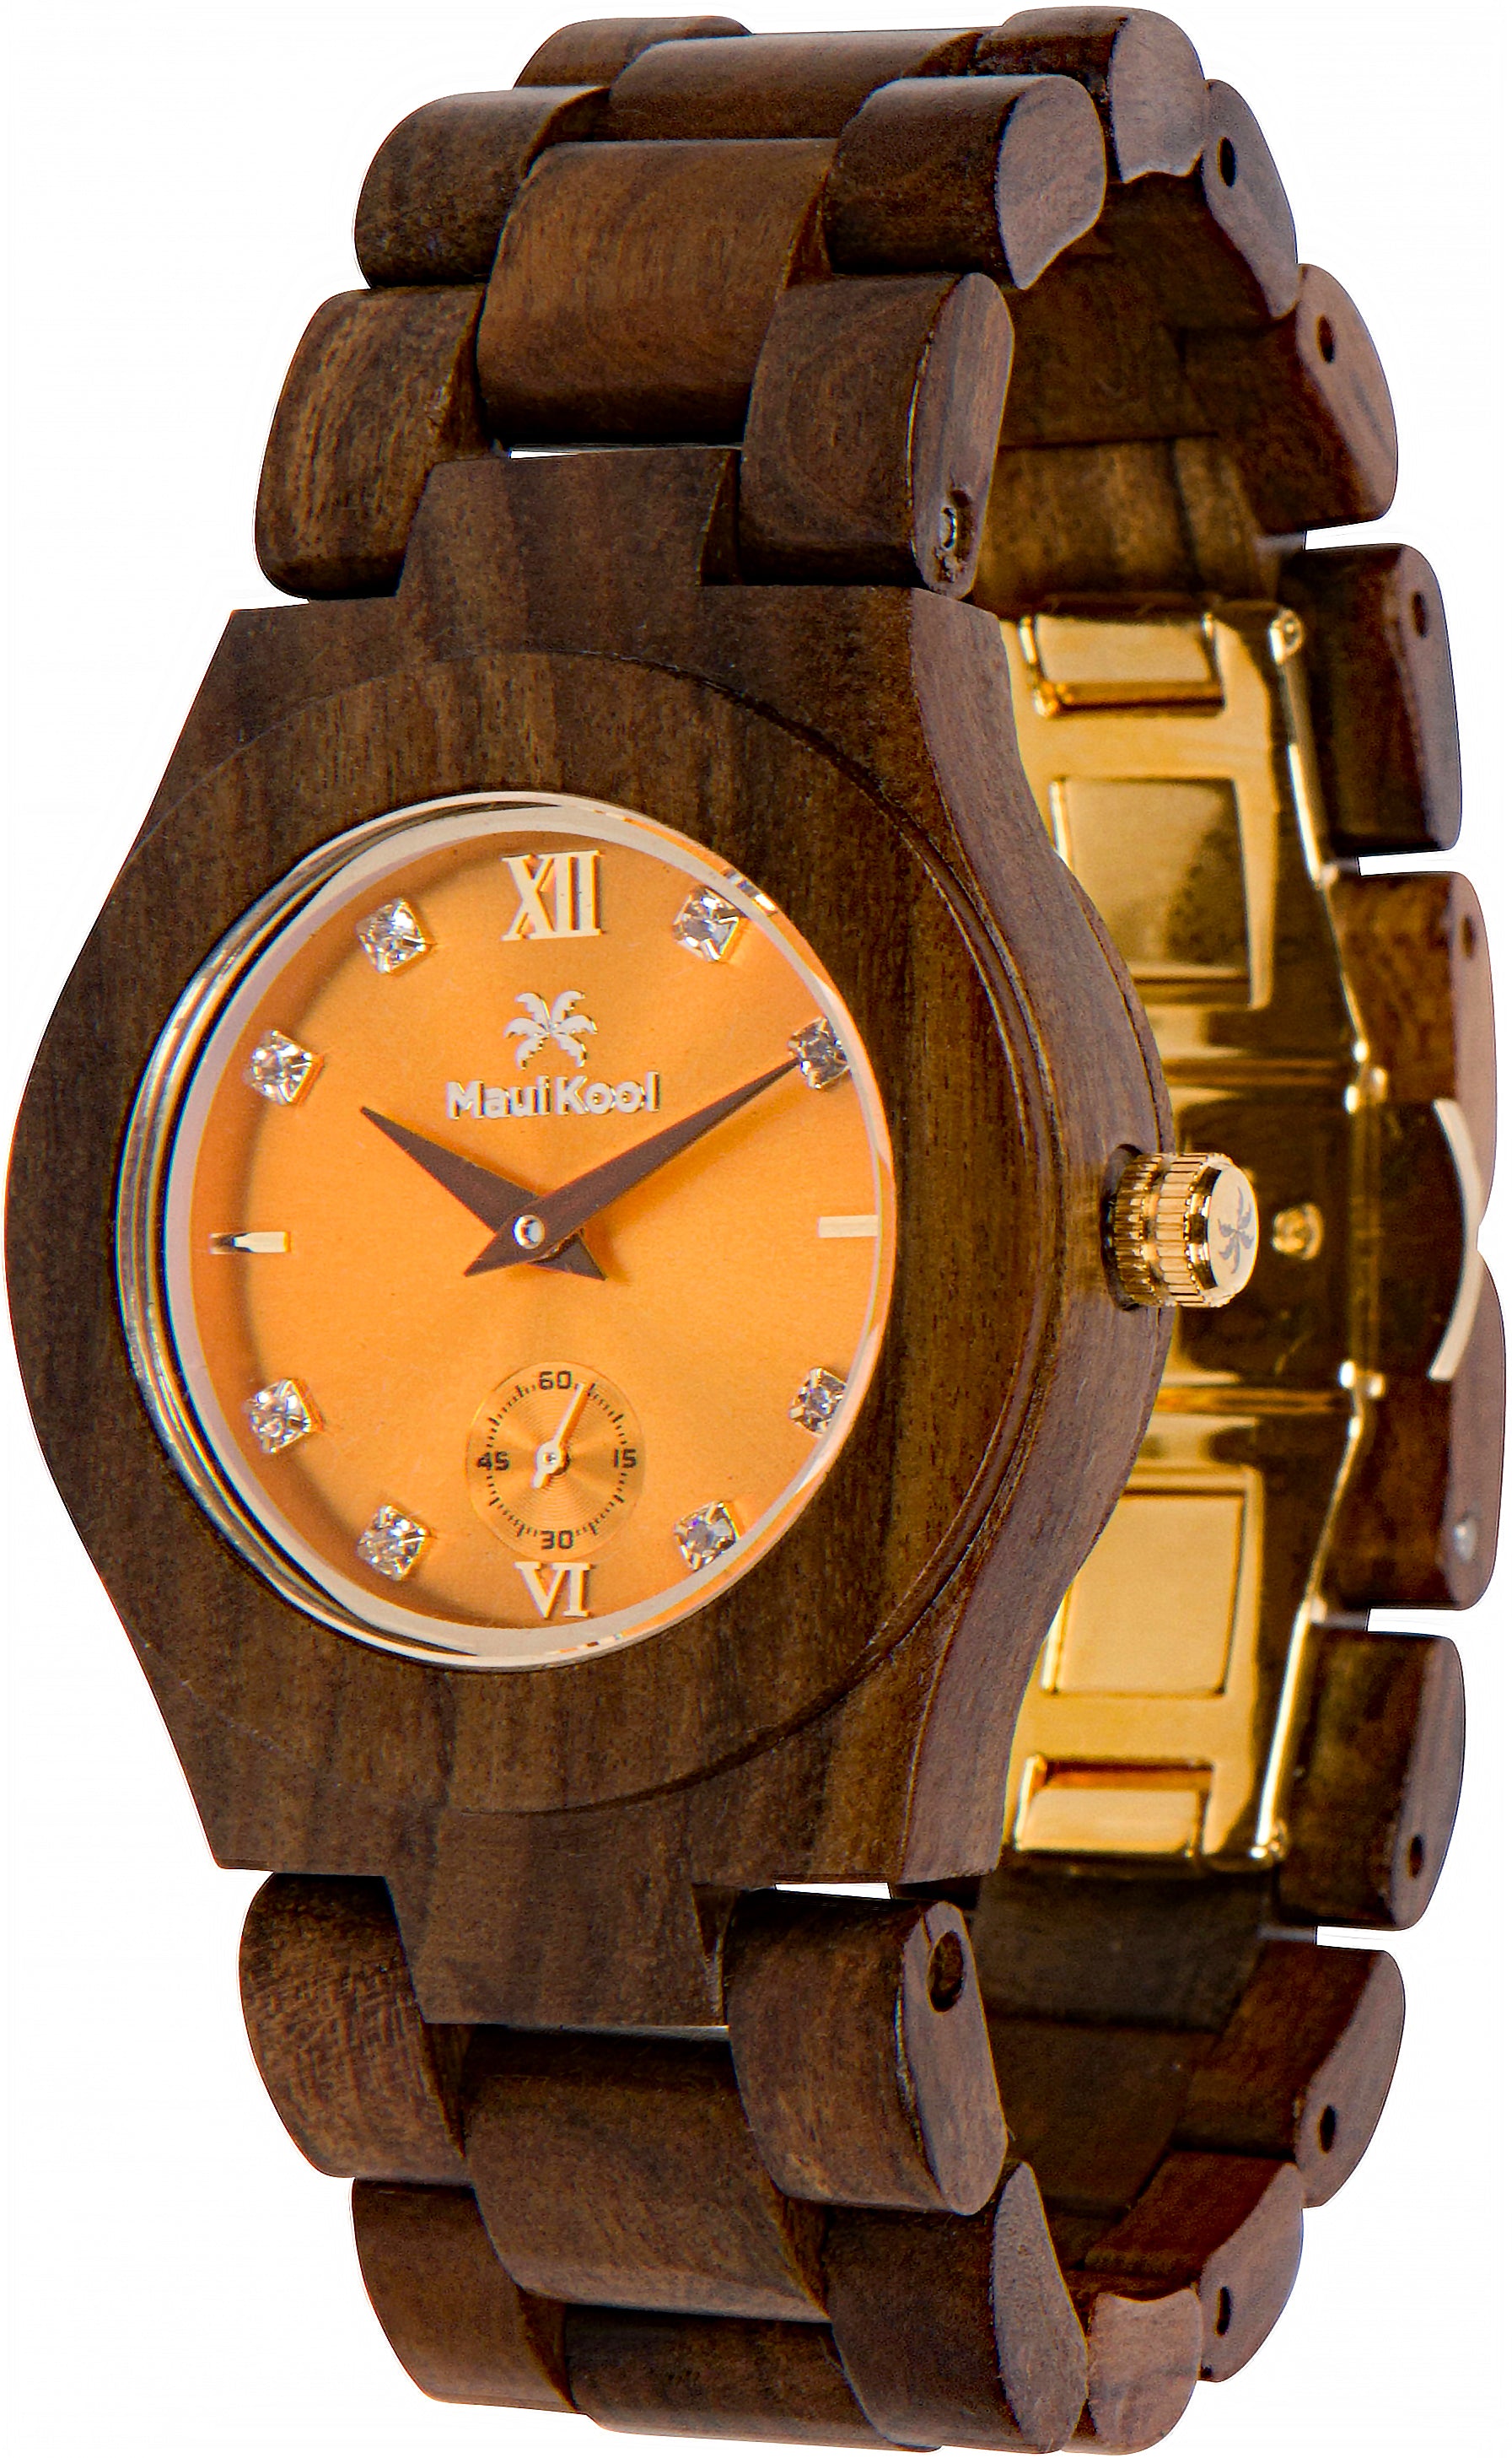 Maui Kool Paia Koa Wood Rose Gold Face Steel and Wooden Watch